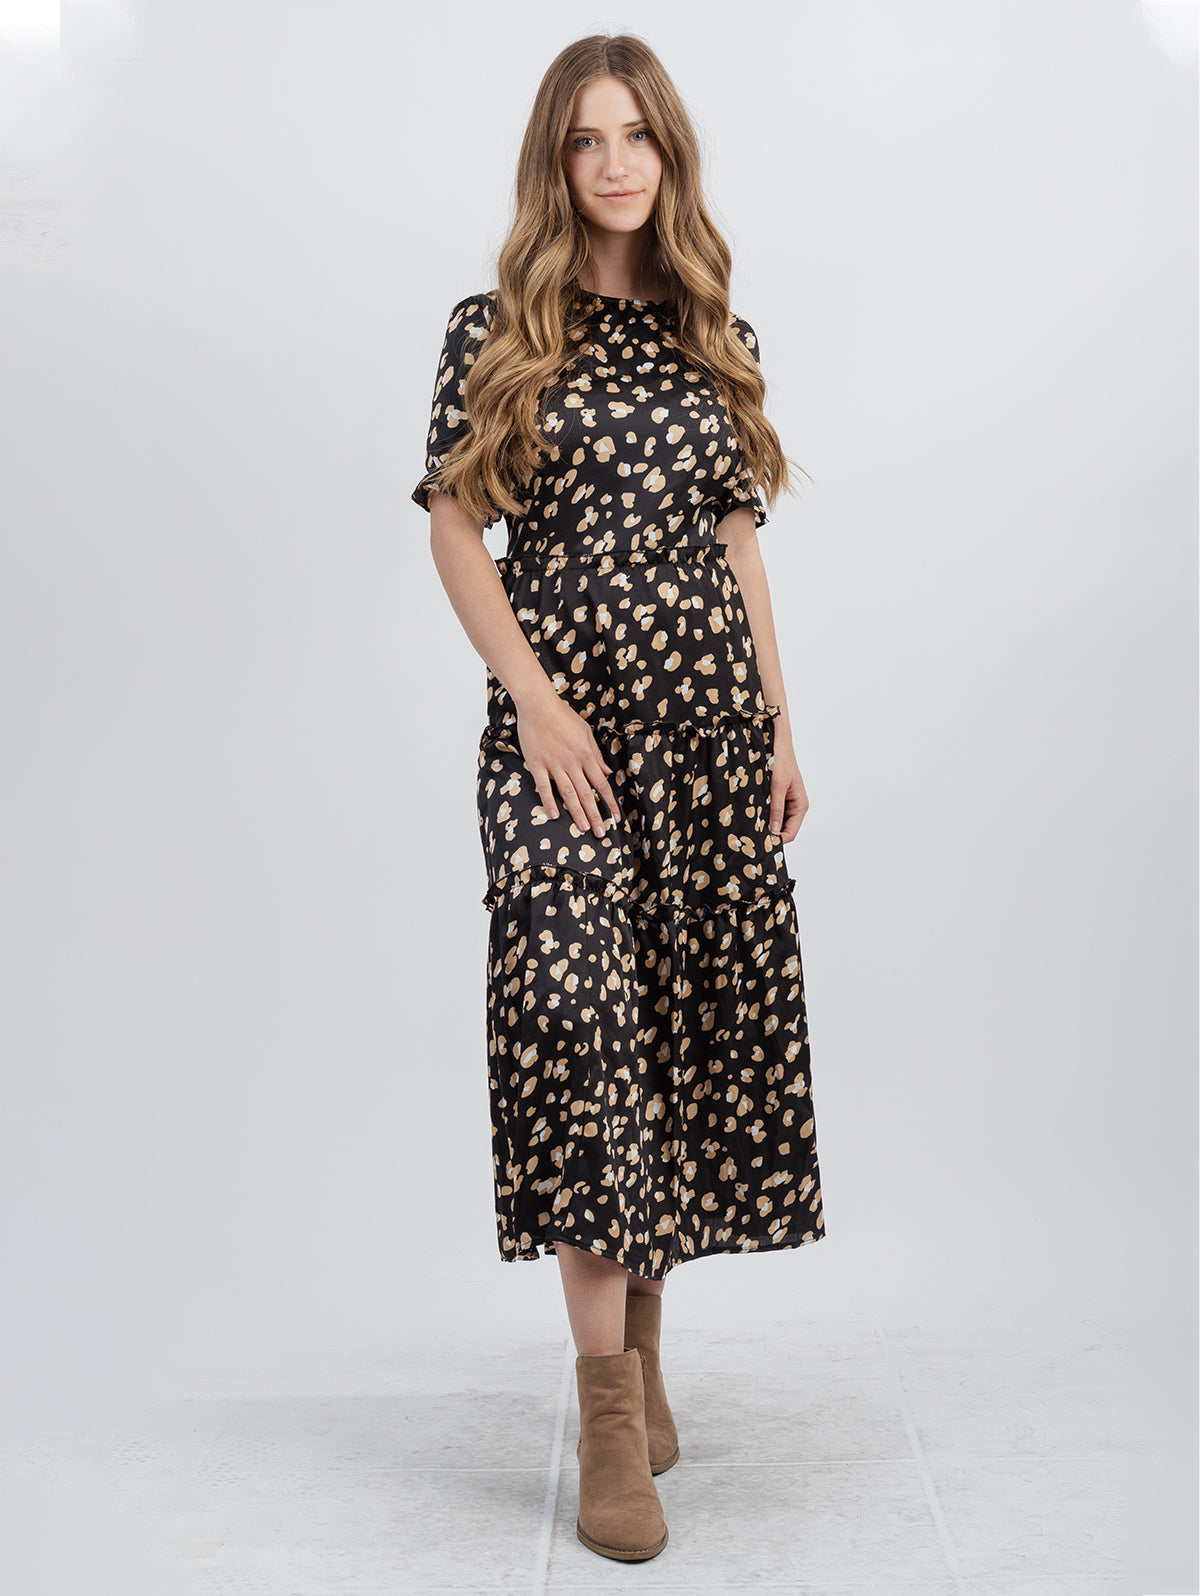 American Bling Plus Size Women Leopard Print Tiered Satin Midi Dress - Montana West World